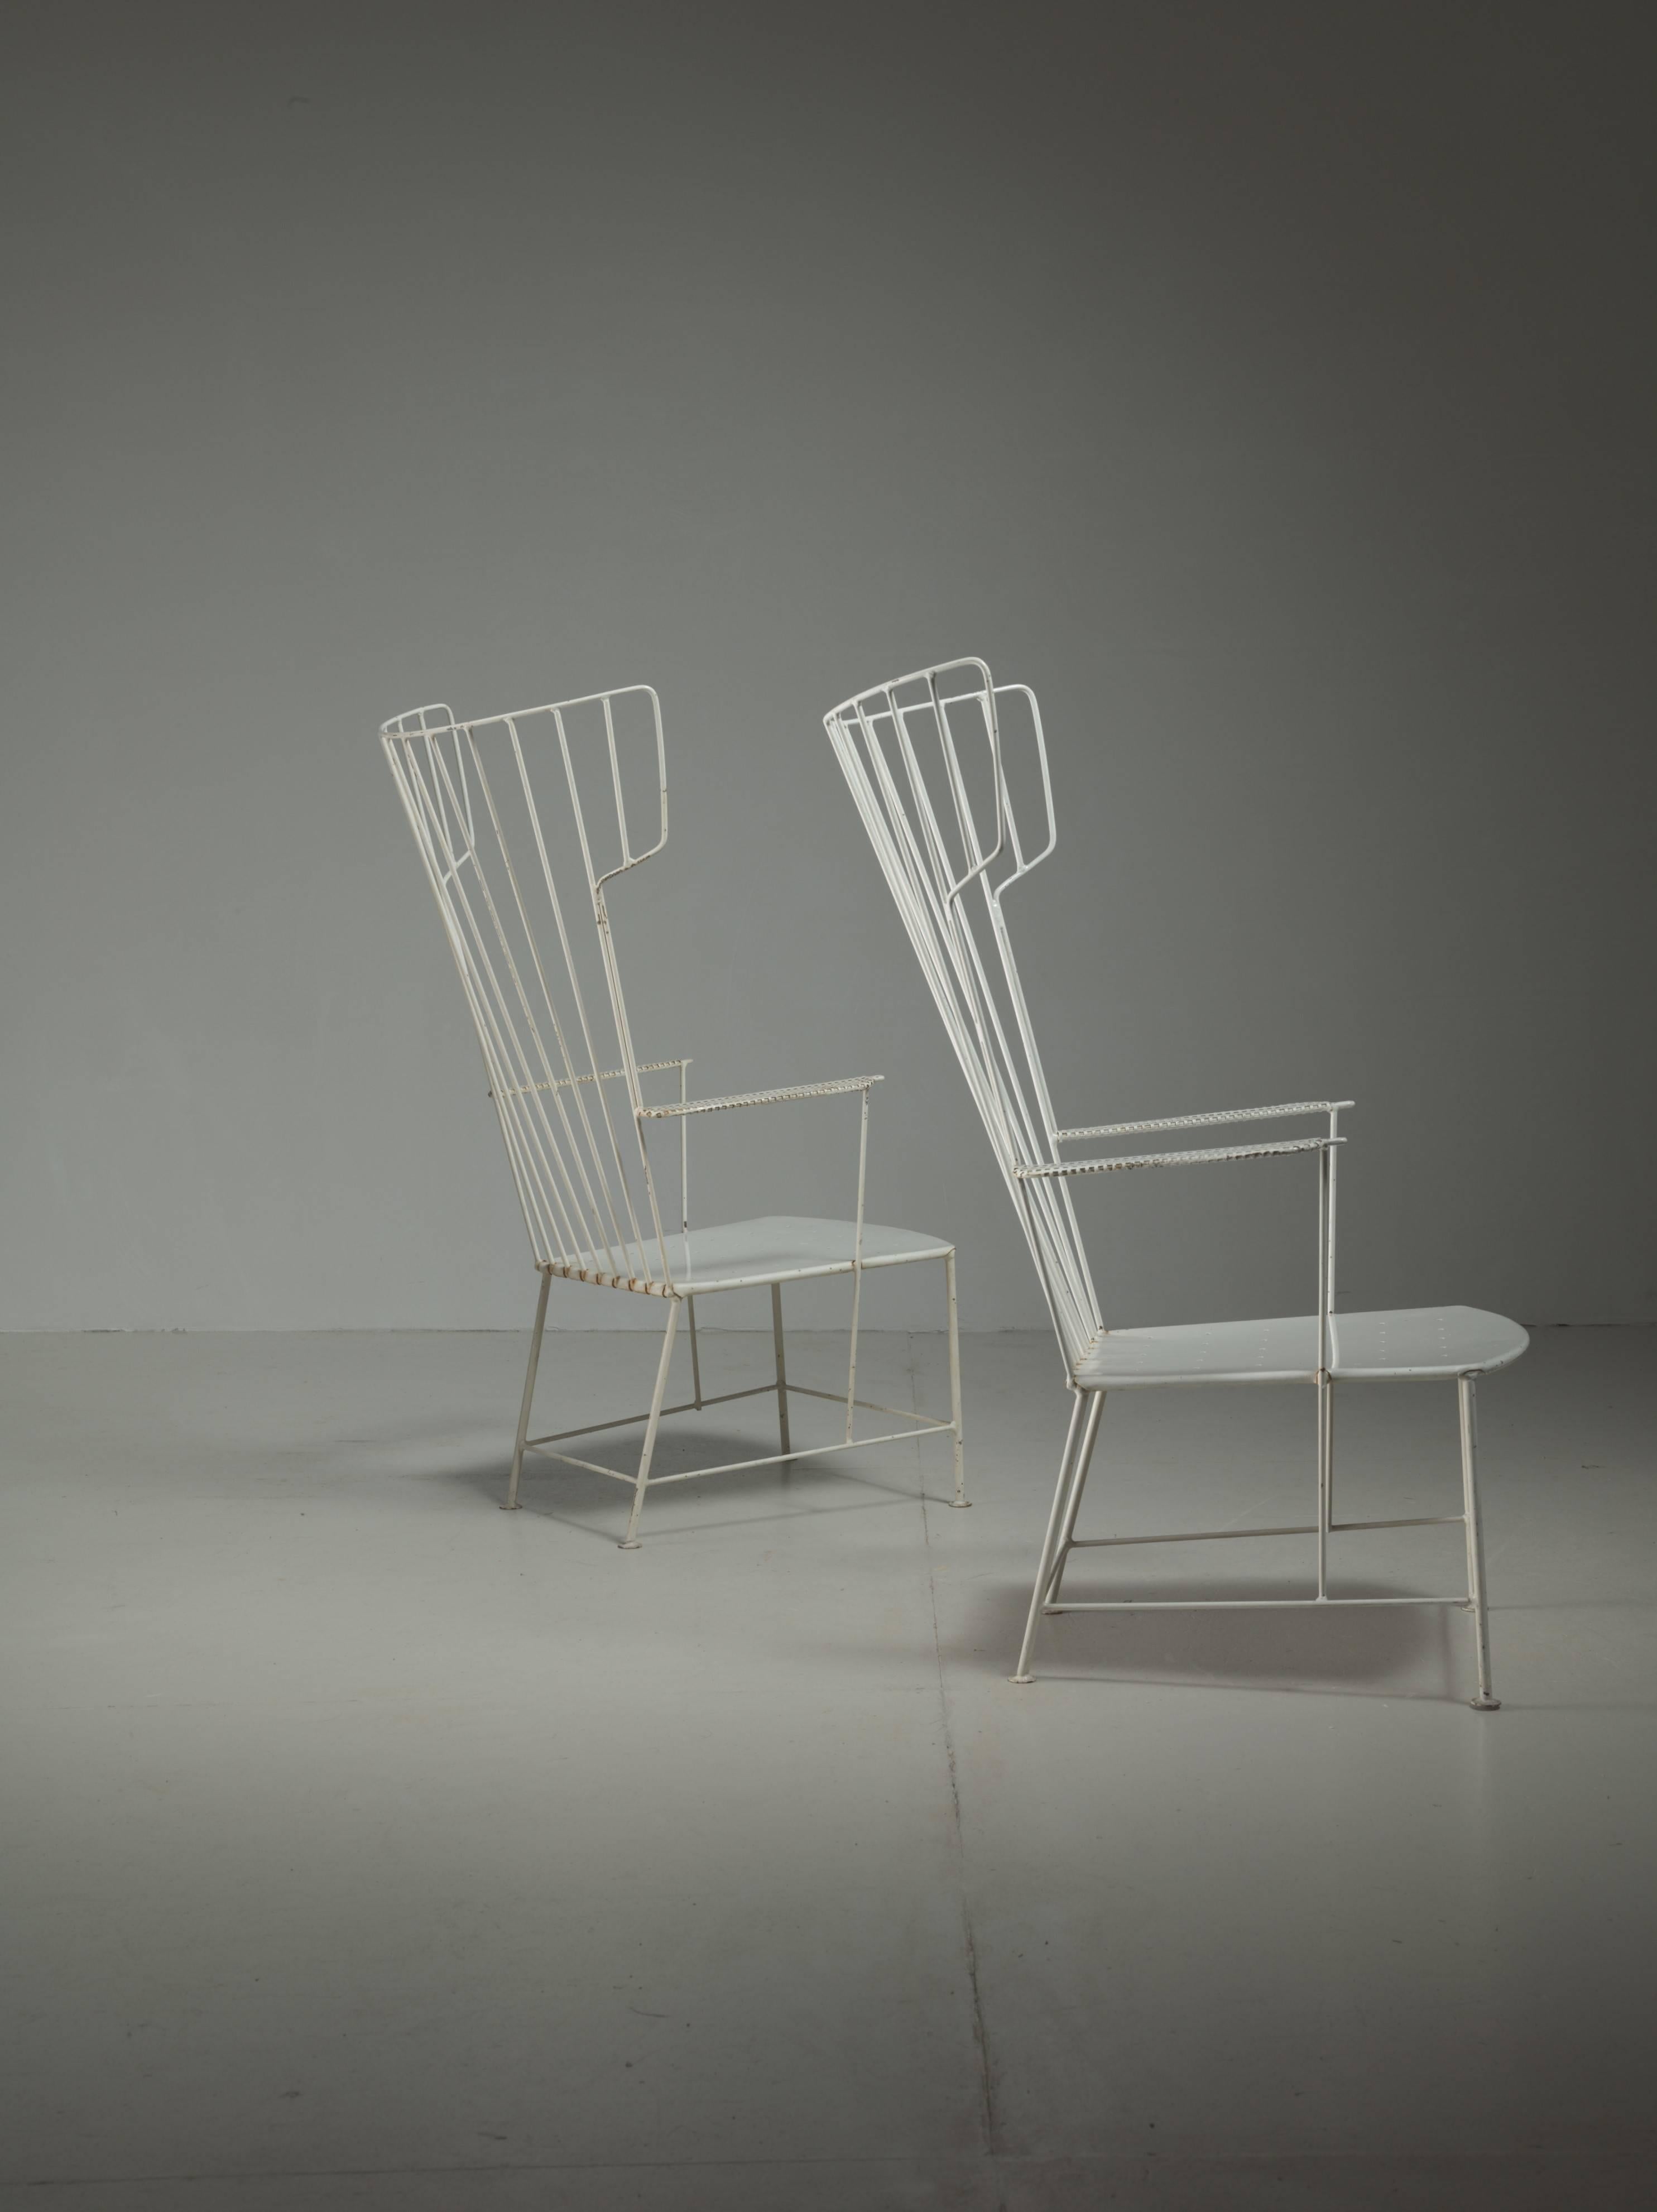 Austrian Praun and Lauterbach Pair of White Metal Garden Chairs, Austria, 1950s For Sale